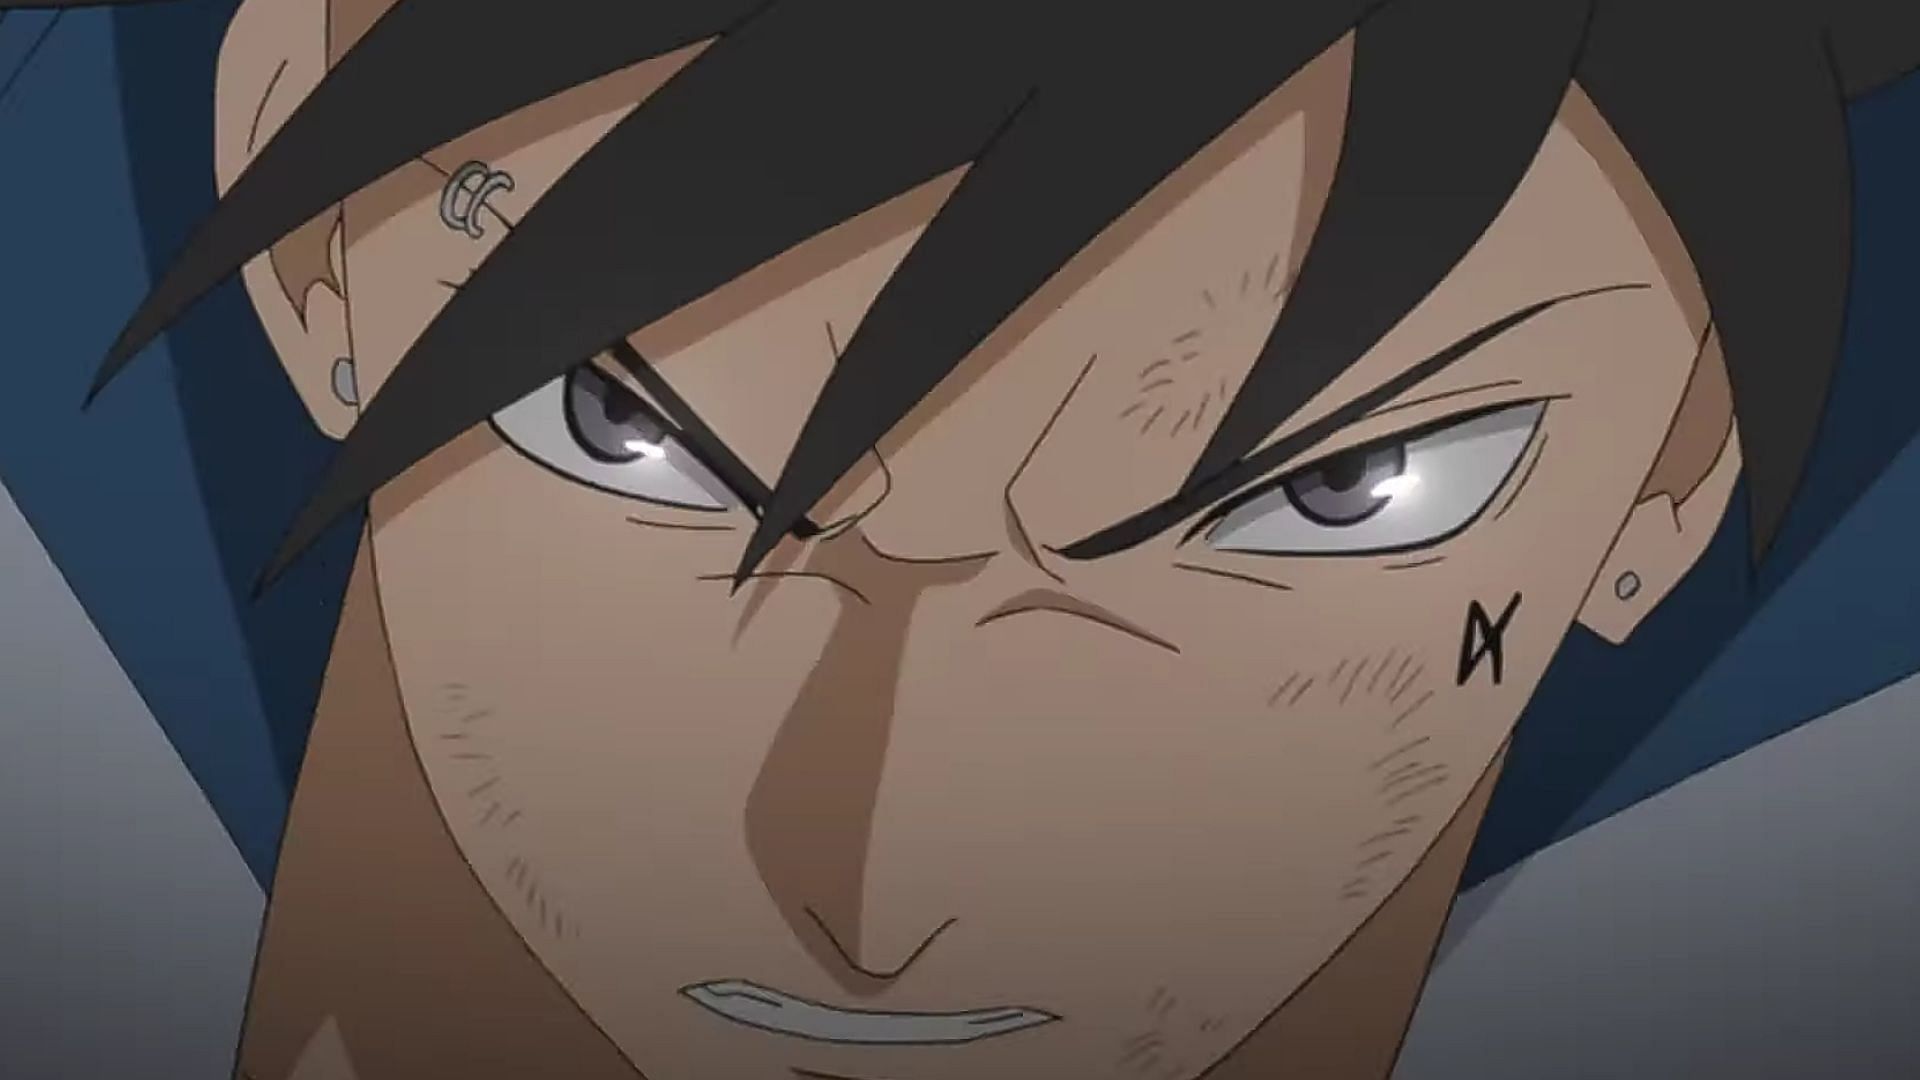 Sasuke finally returns to the Boruto manga to confront Kawaki